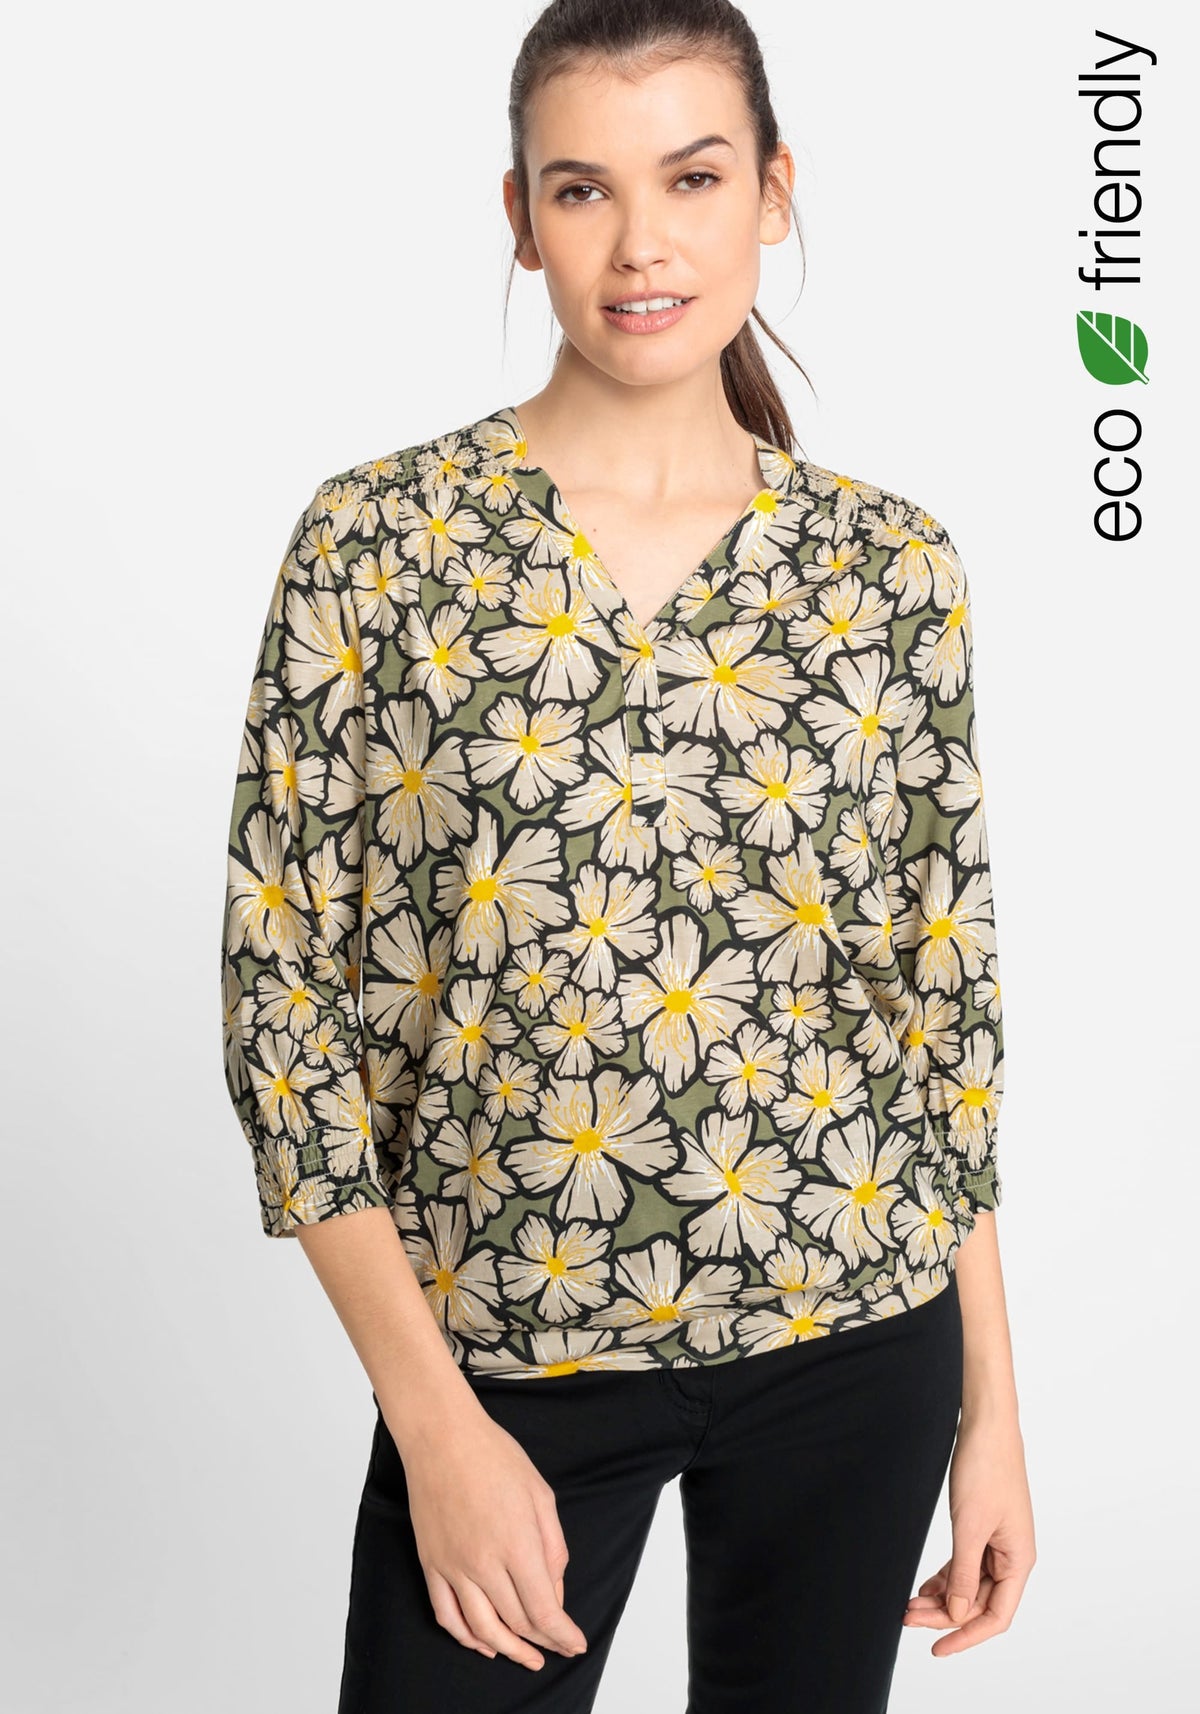 Cotton Blend Floral Print Tunic T-Shirt containing TENCEL™ Modal